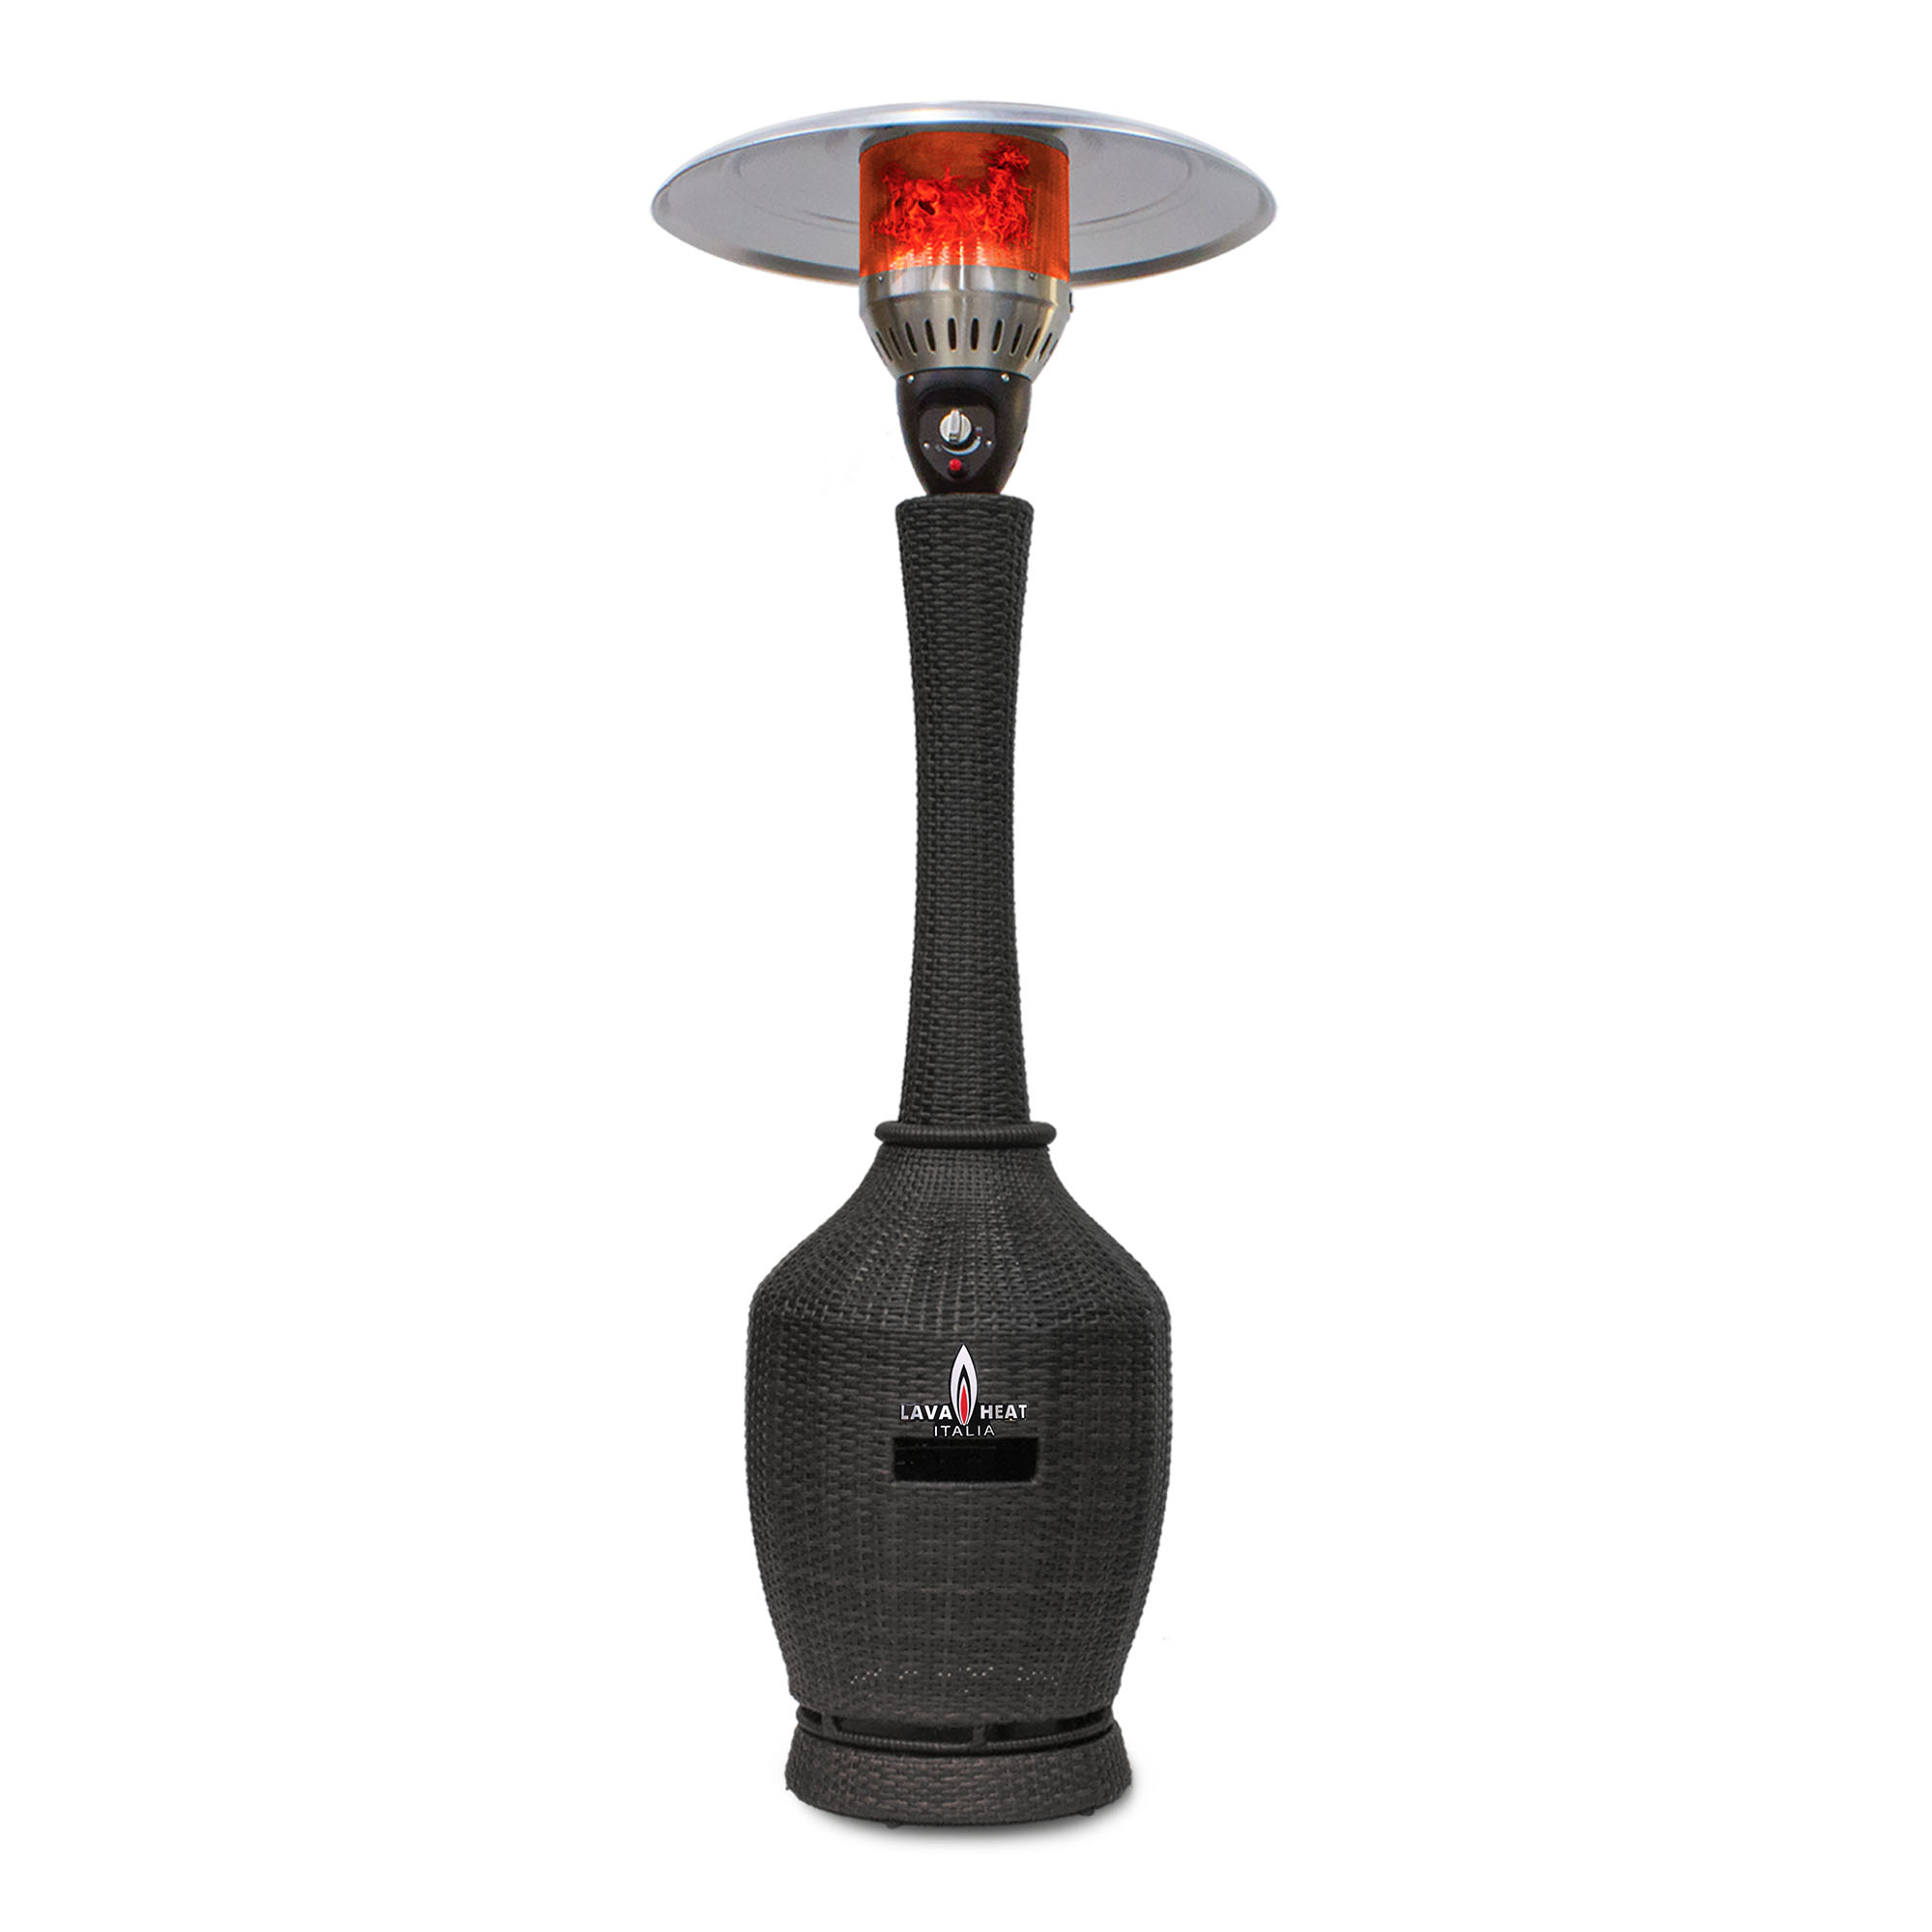 The Lava Heat Italia T-Line 7 Foot Commercial Umbrella Heater, Manual Ignition, Wicker Black Finish, Natural Gas